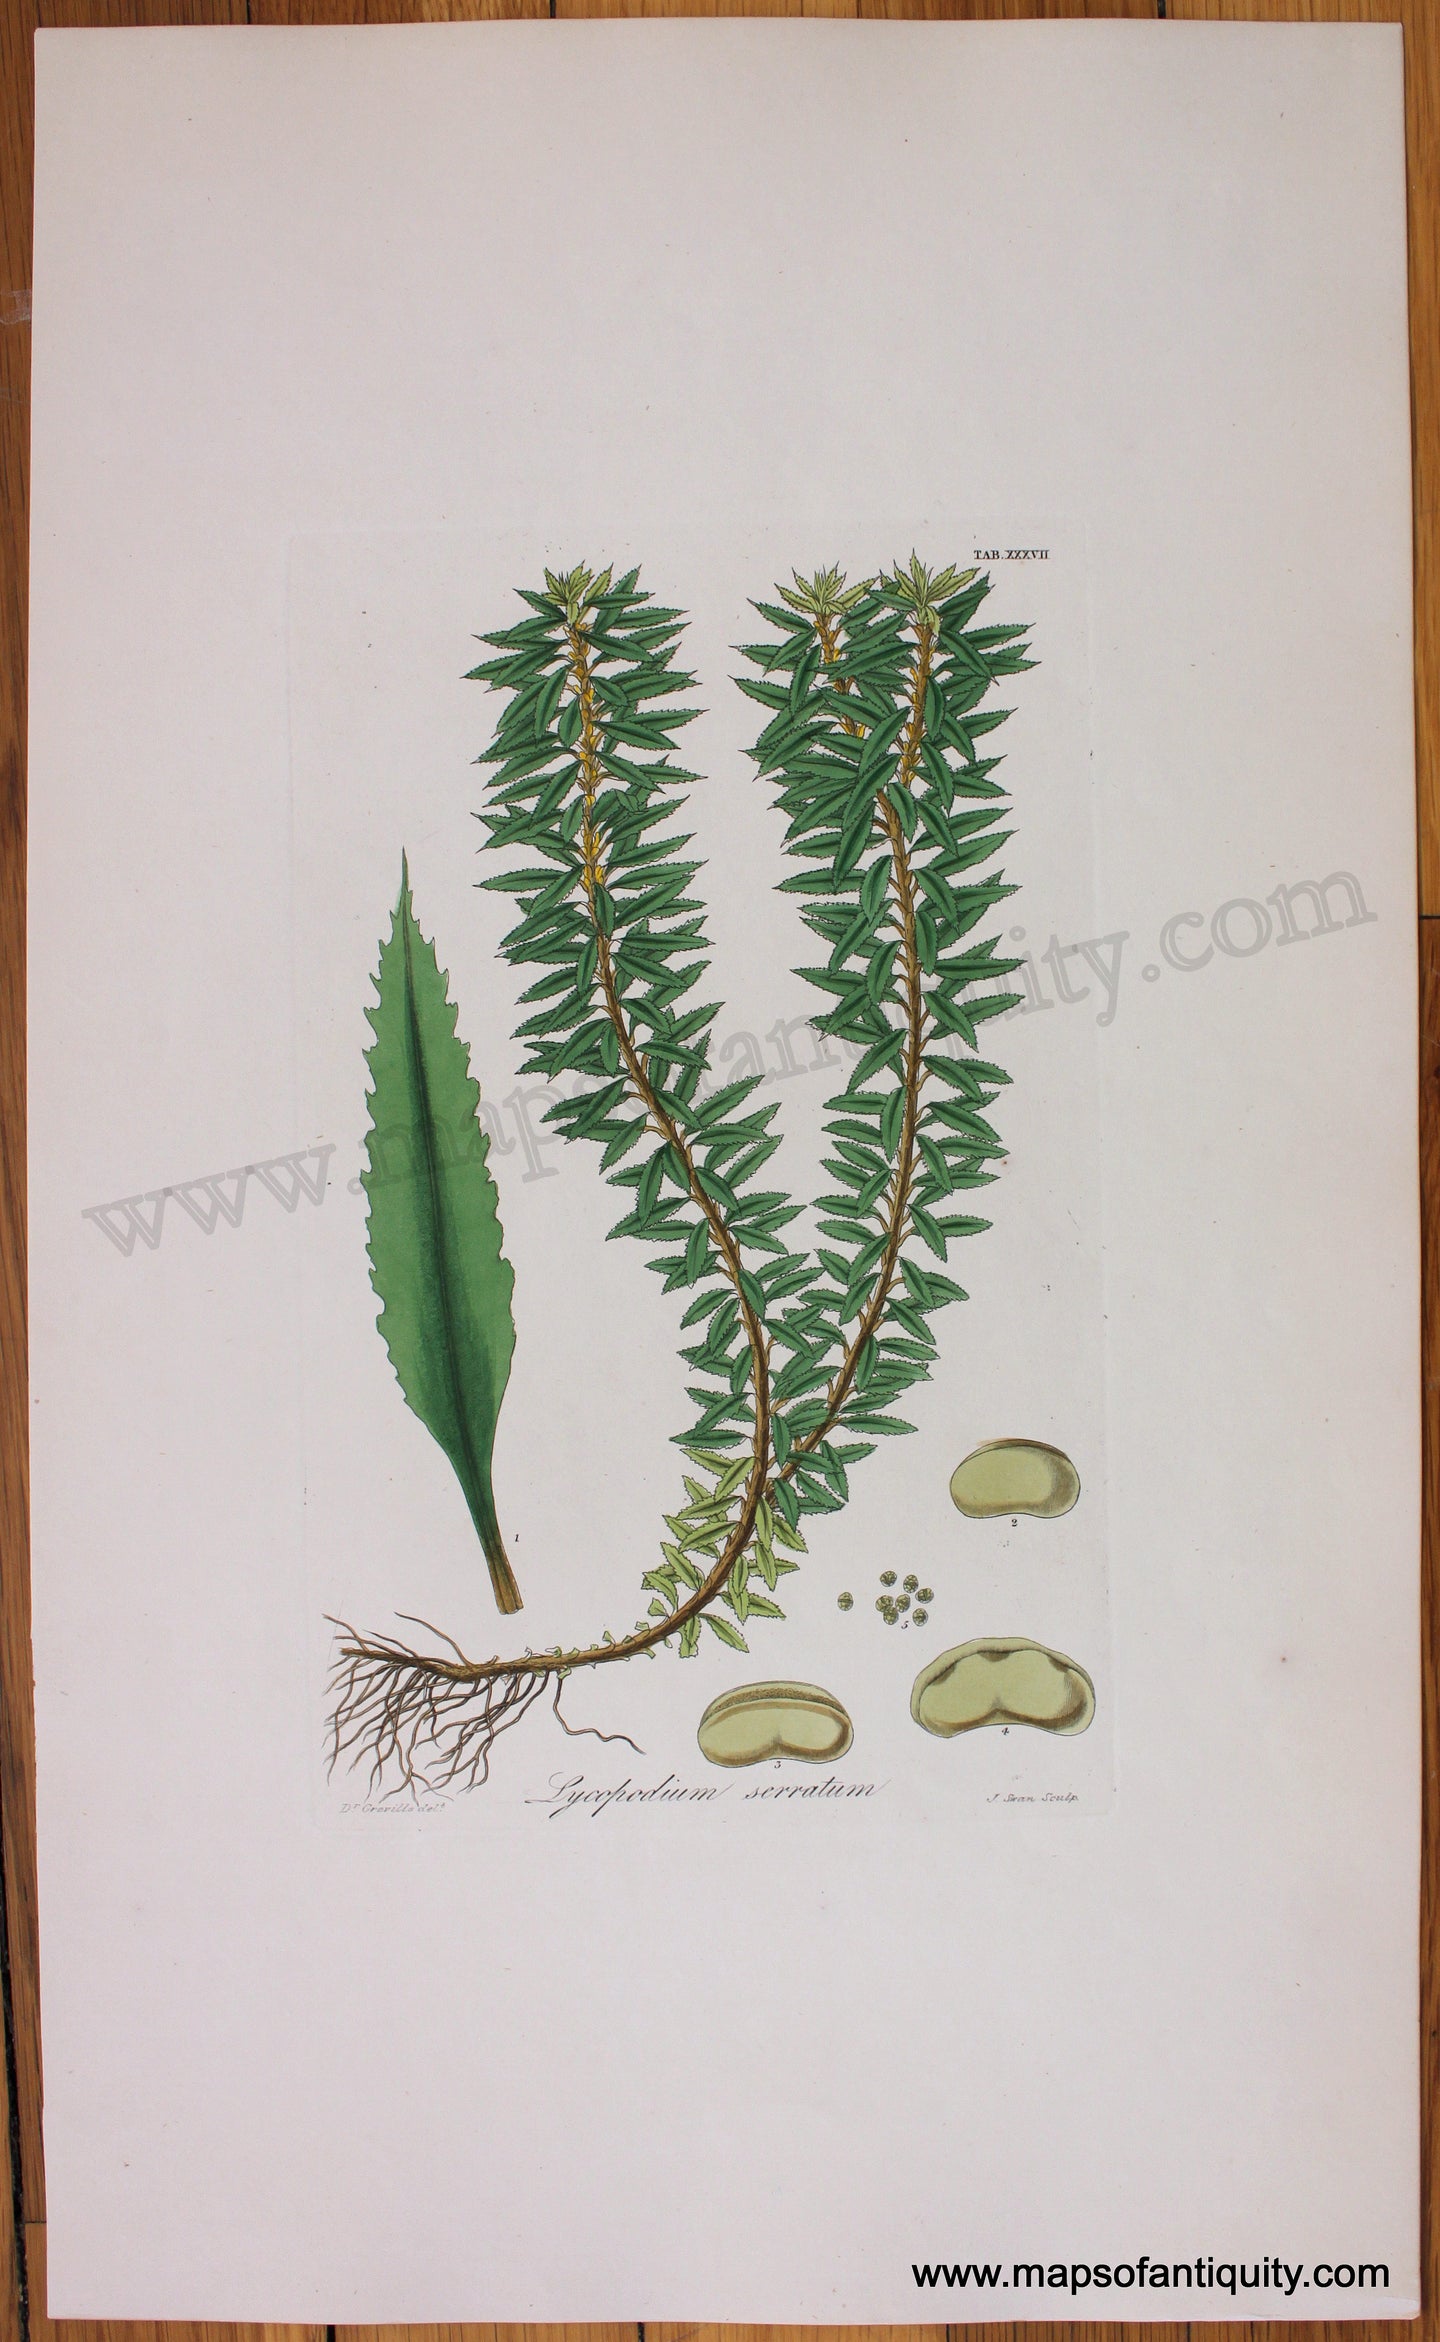 Antique-Botanical-Print-Lycopodium-serratum-1831-Hooker-Botanical--1800s-19th-century-Maps-of-Antiquity